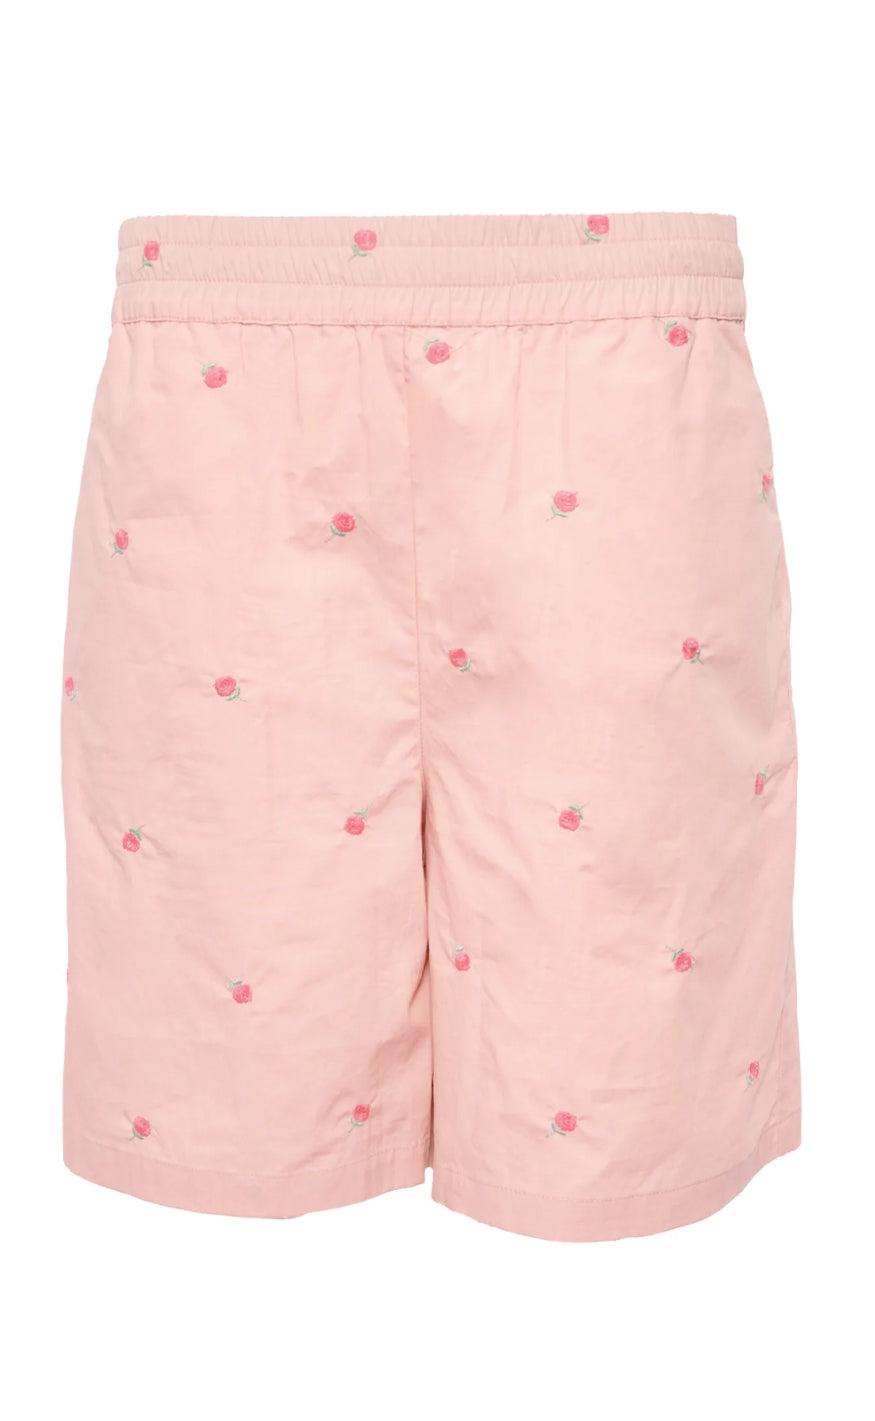 #2 - Noella Shorts - Asia - Pink Flower